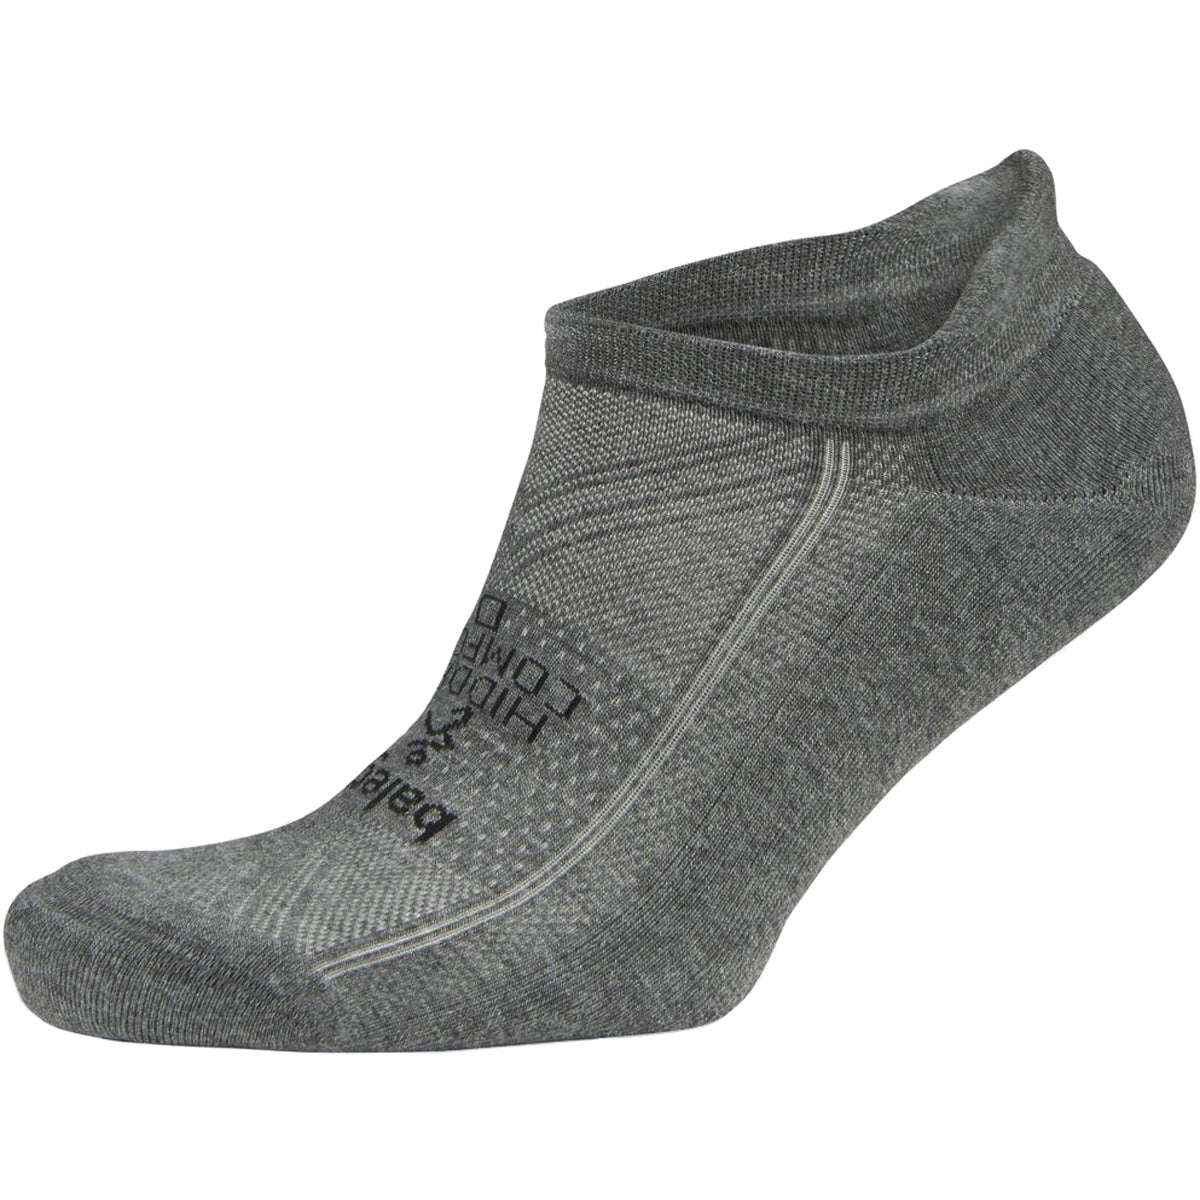 Balega Hidden Comfort Sole Cushioning Running Socks - Charcoal Balega